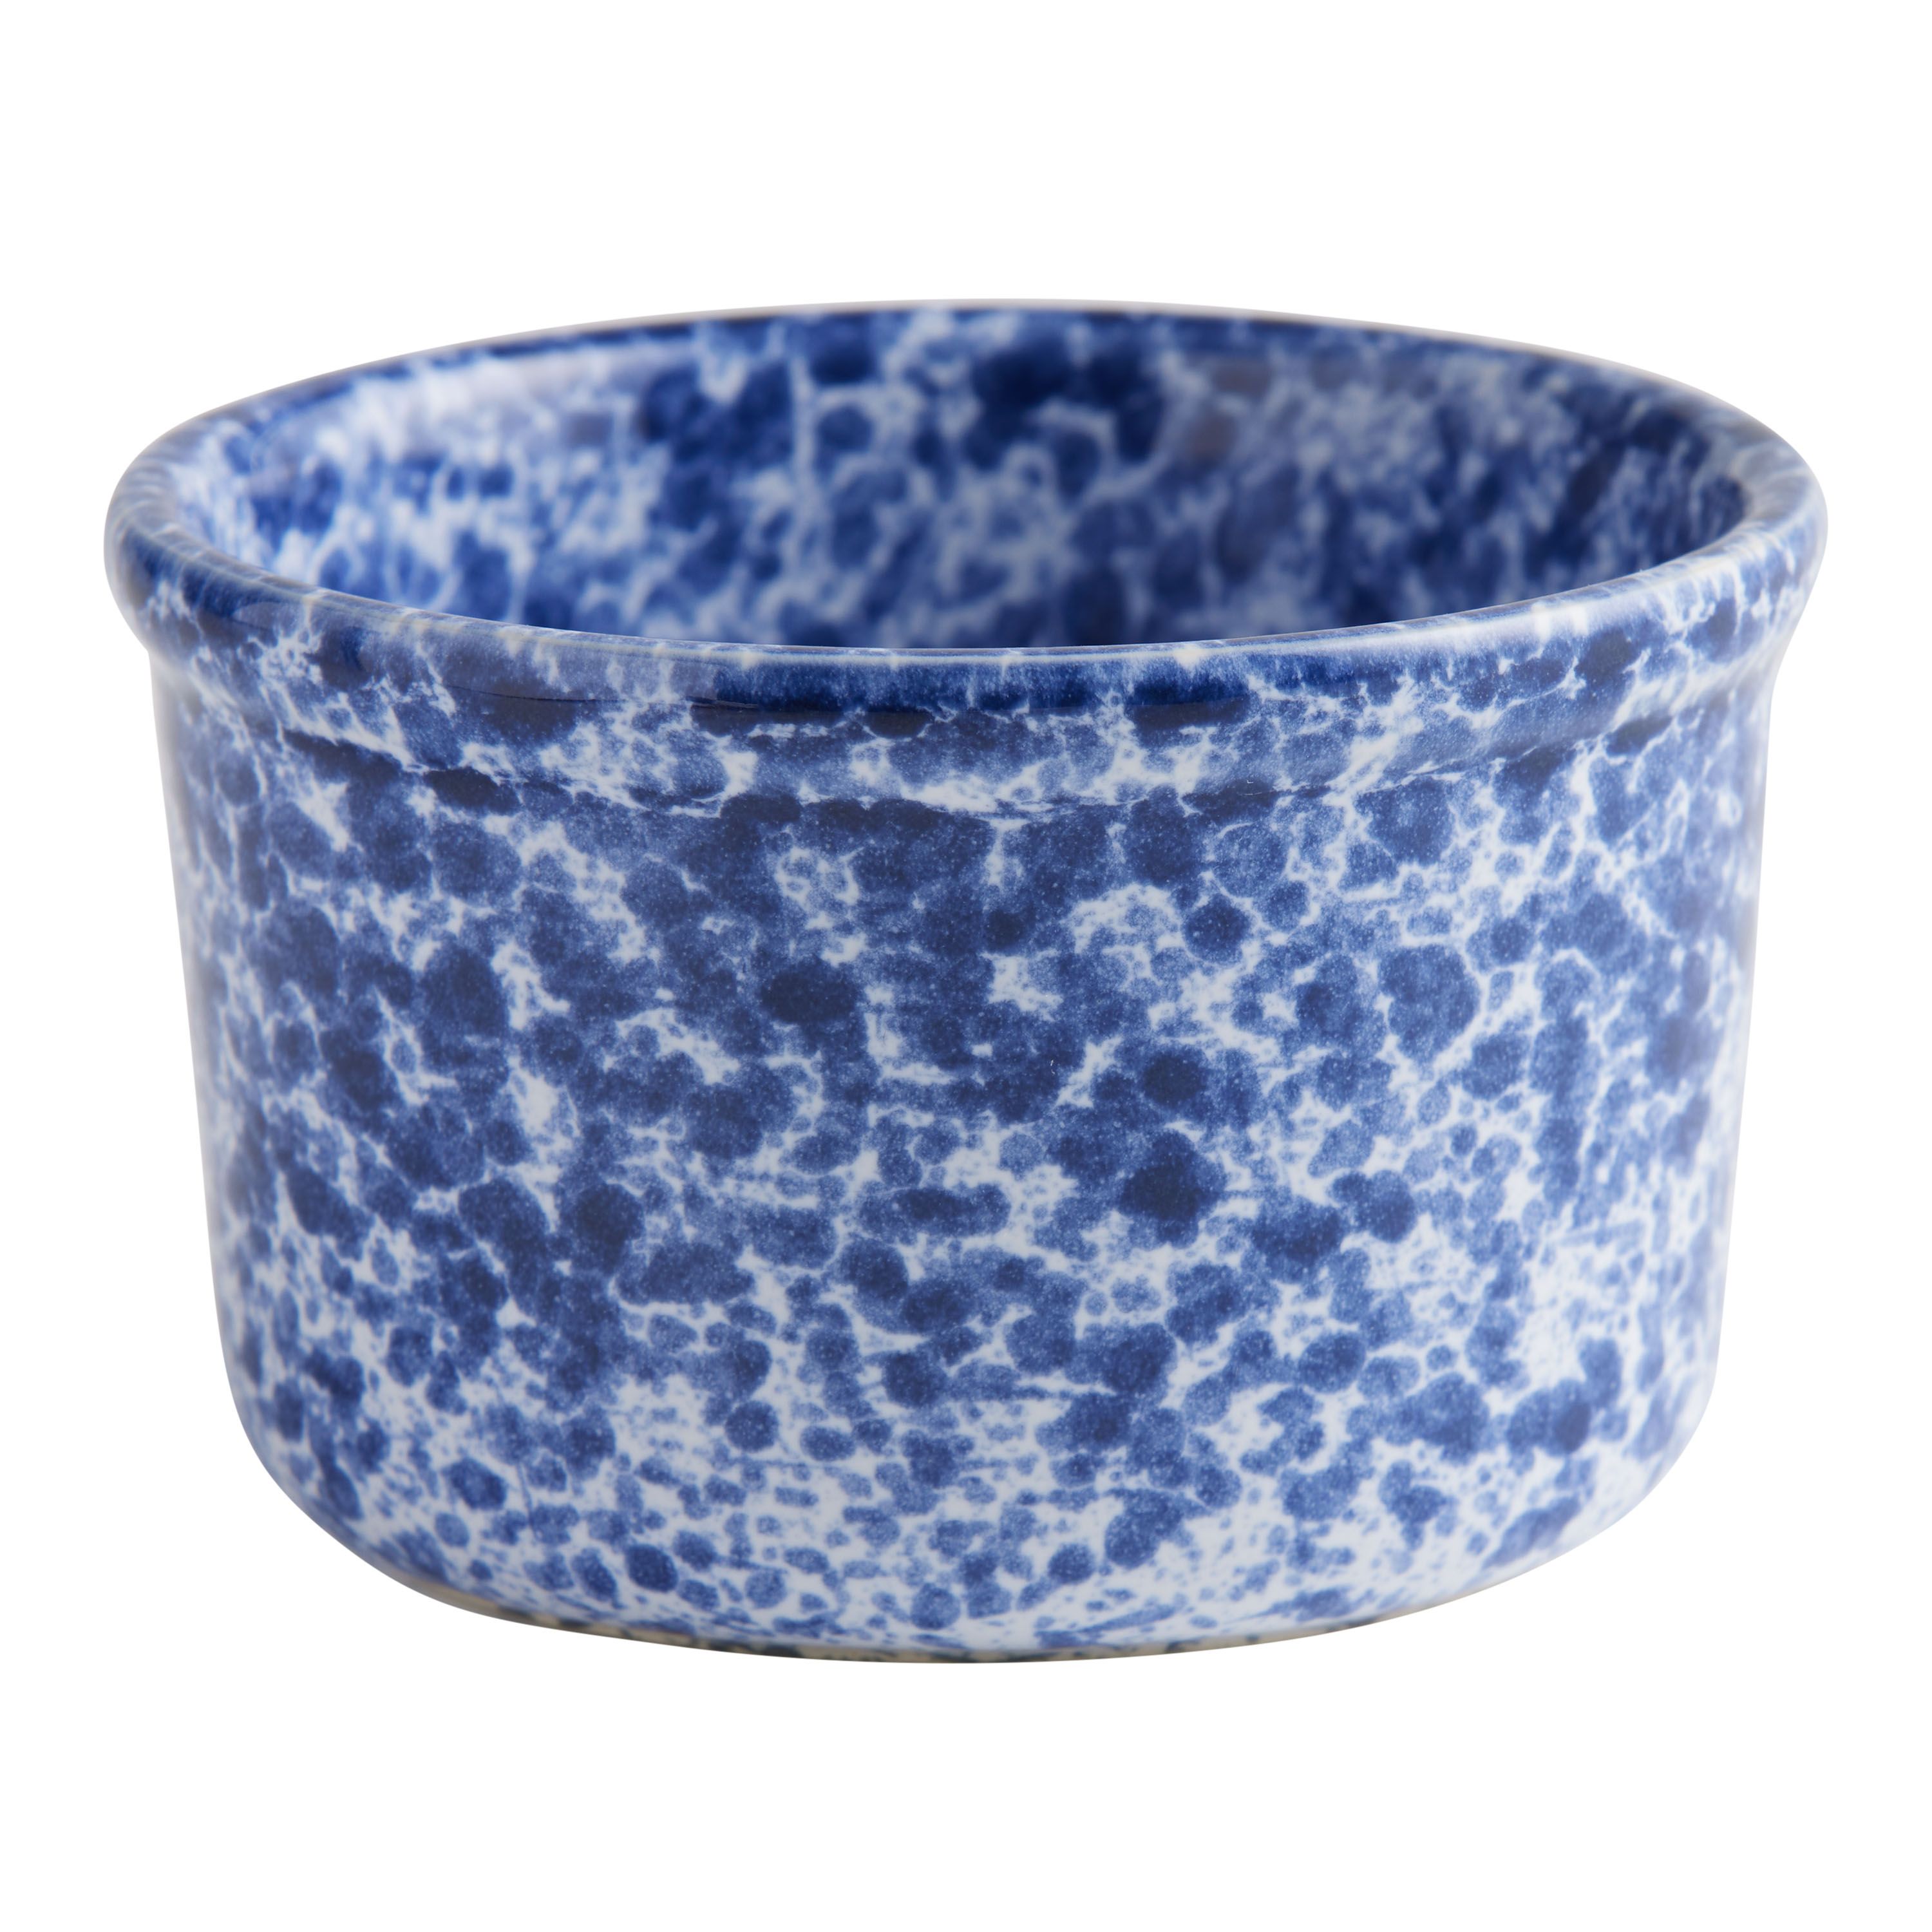 Awaken Blue and White Speckled Ceramic Ramekin Set of 2 | World Market